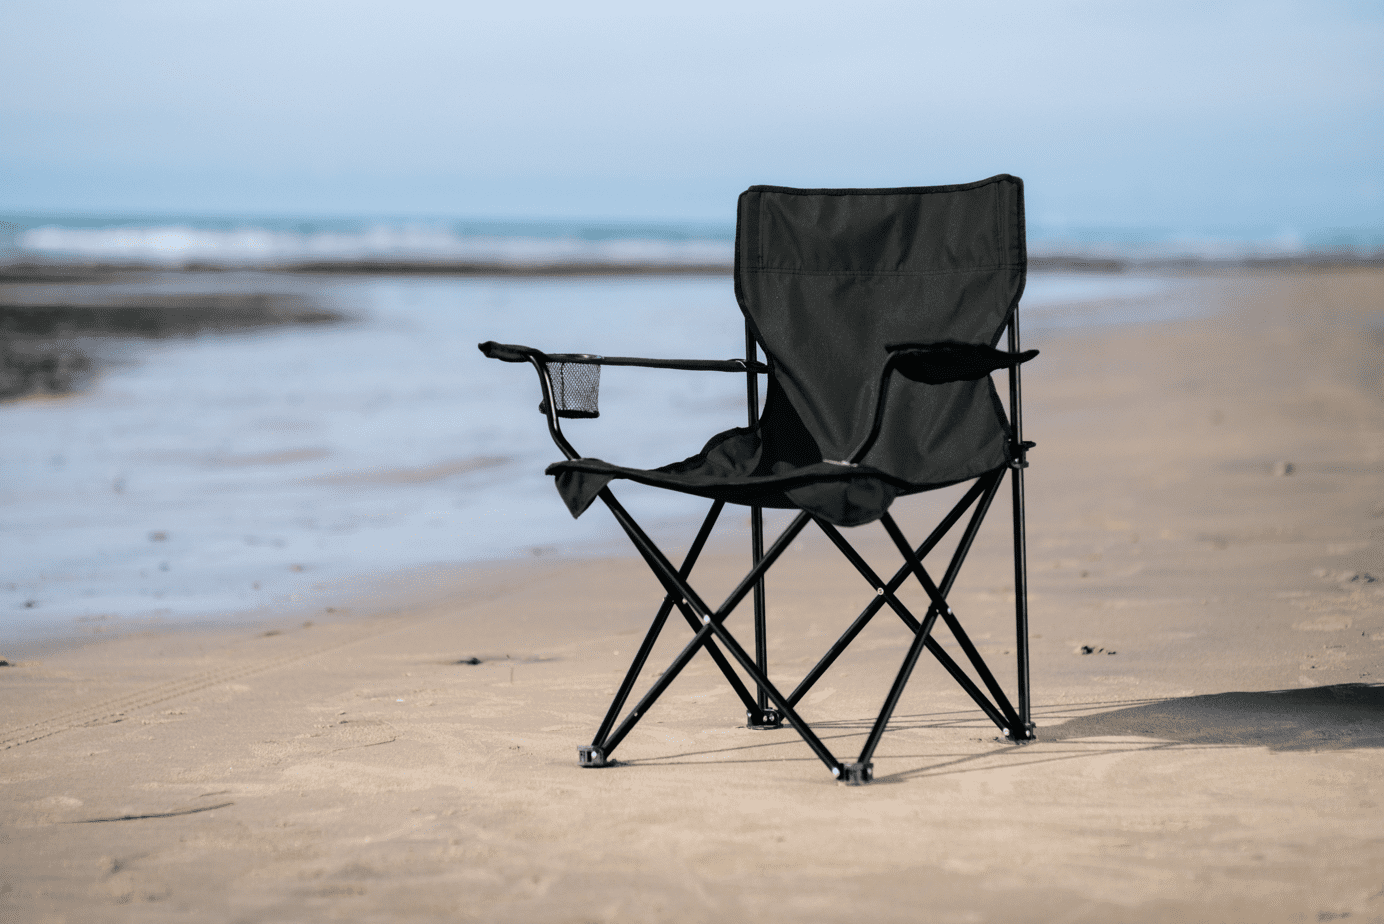 Travel Chair - C-Series Slacker - Black